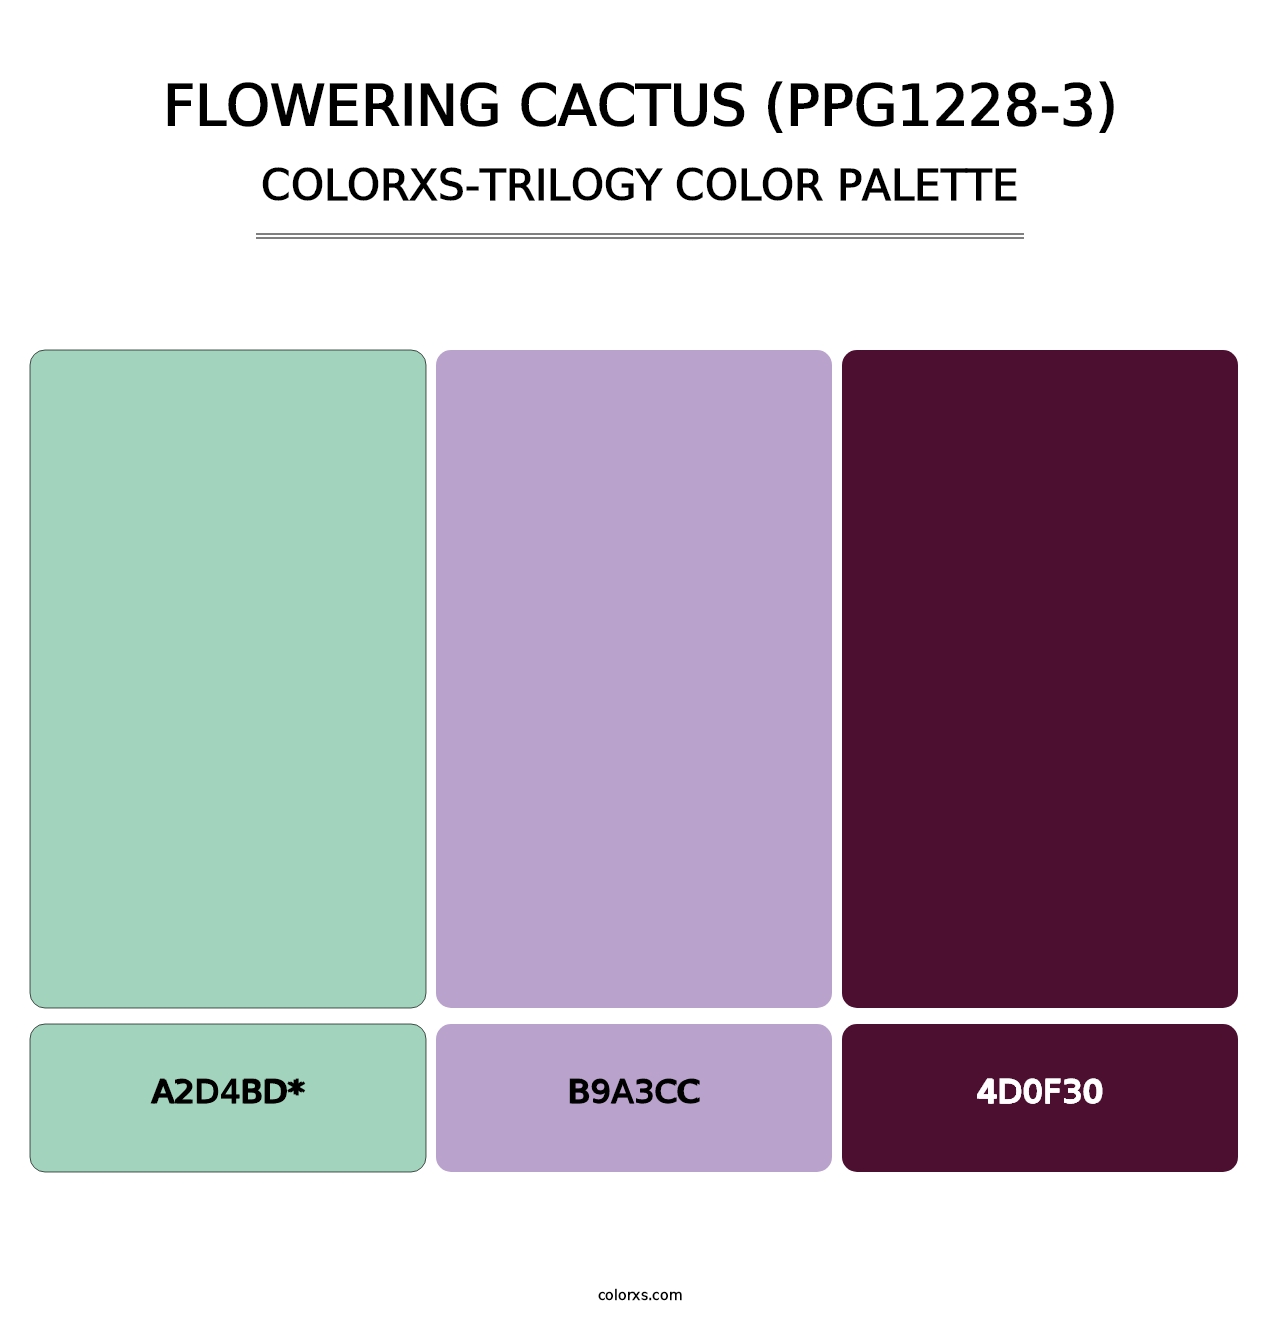 Flowering Cactus (PPG1228-3) - Colorxs Trilogy Palette